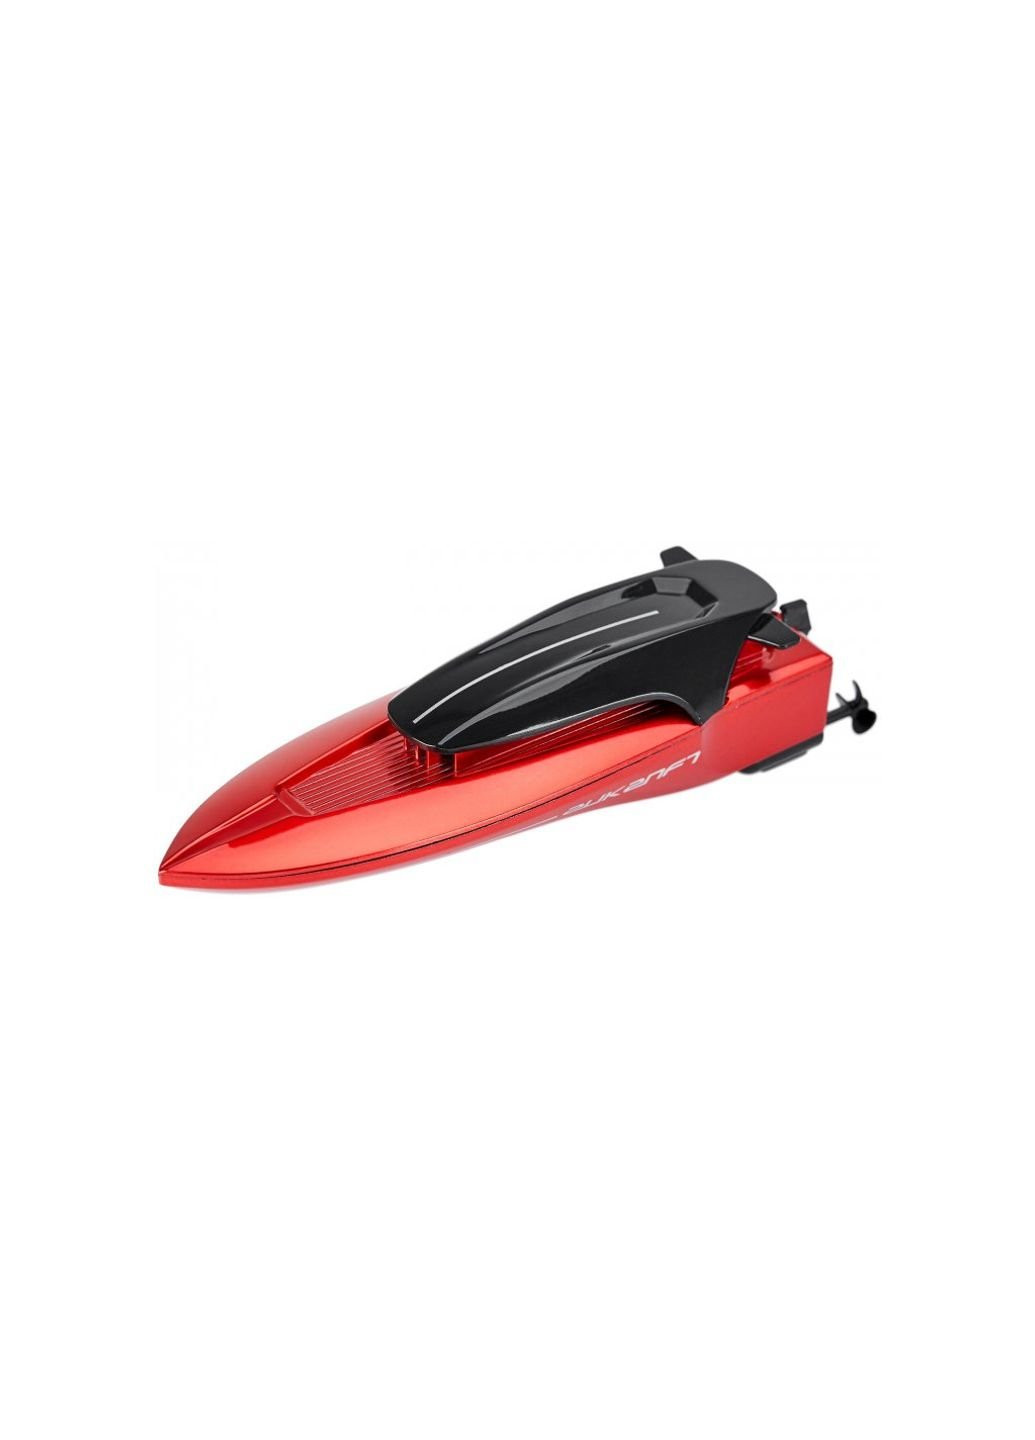 Радиоуправляемая игрушка Лодка Speed Boat Red (QT888A red) Zipp Toys (254080441)